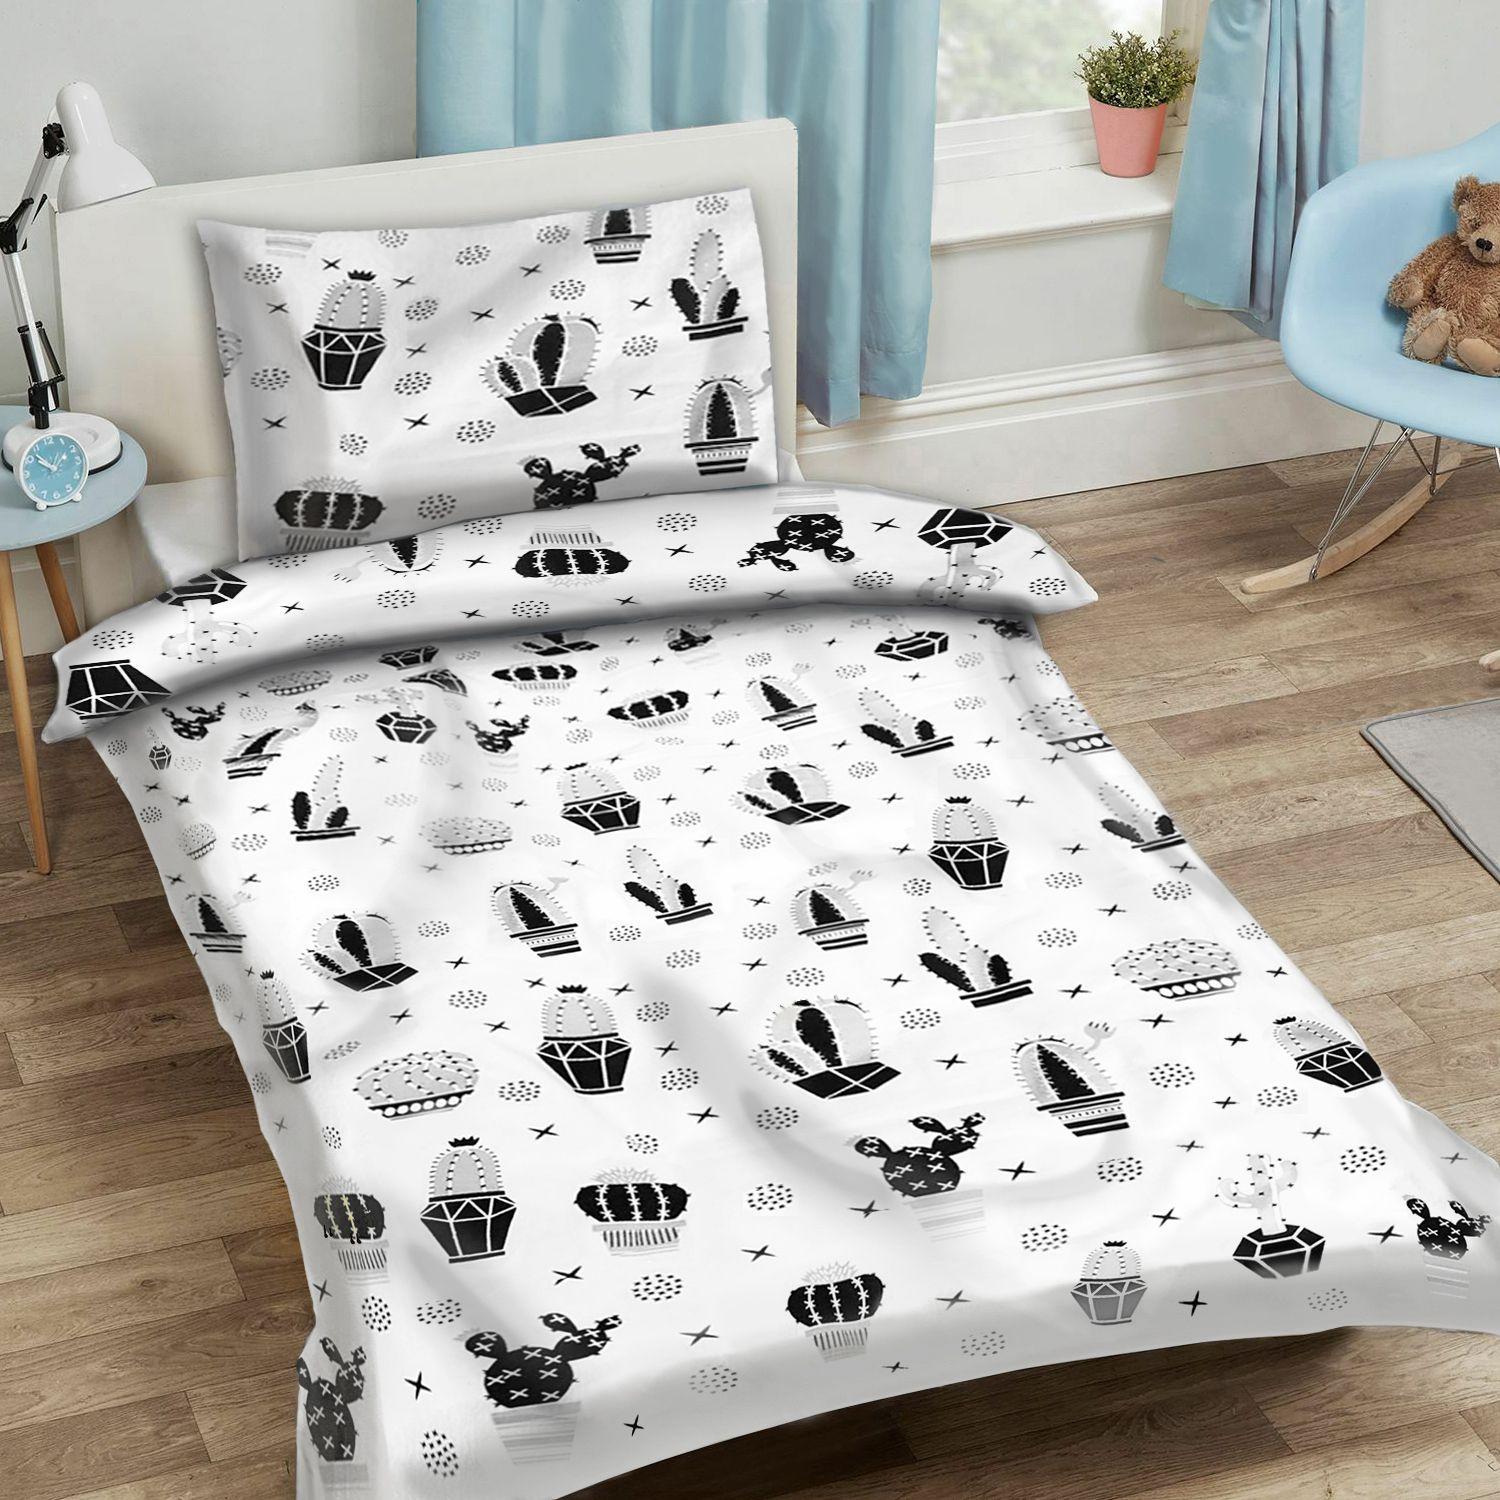 Set of children's bedding 90x120cm - black and white cacti